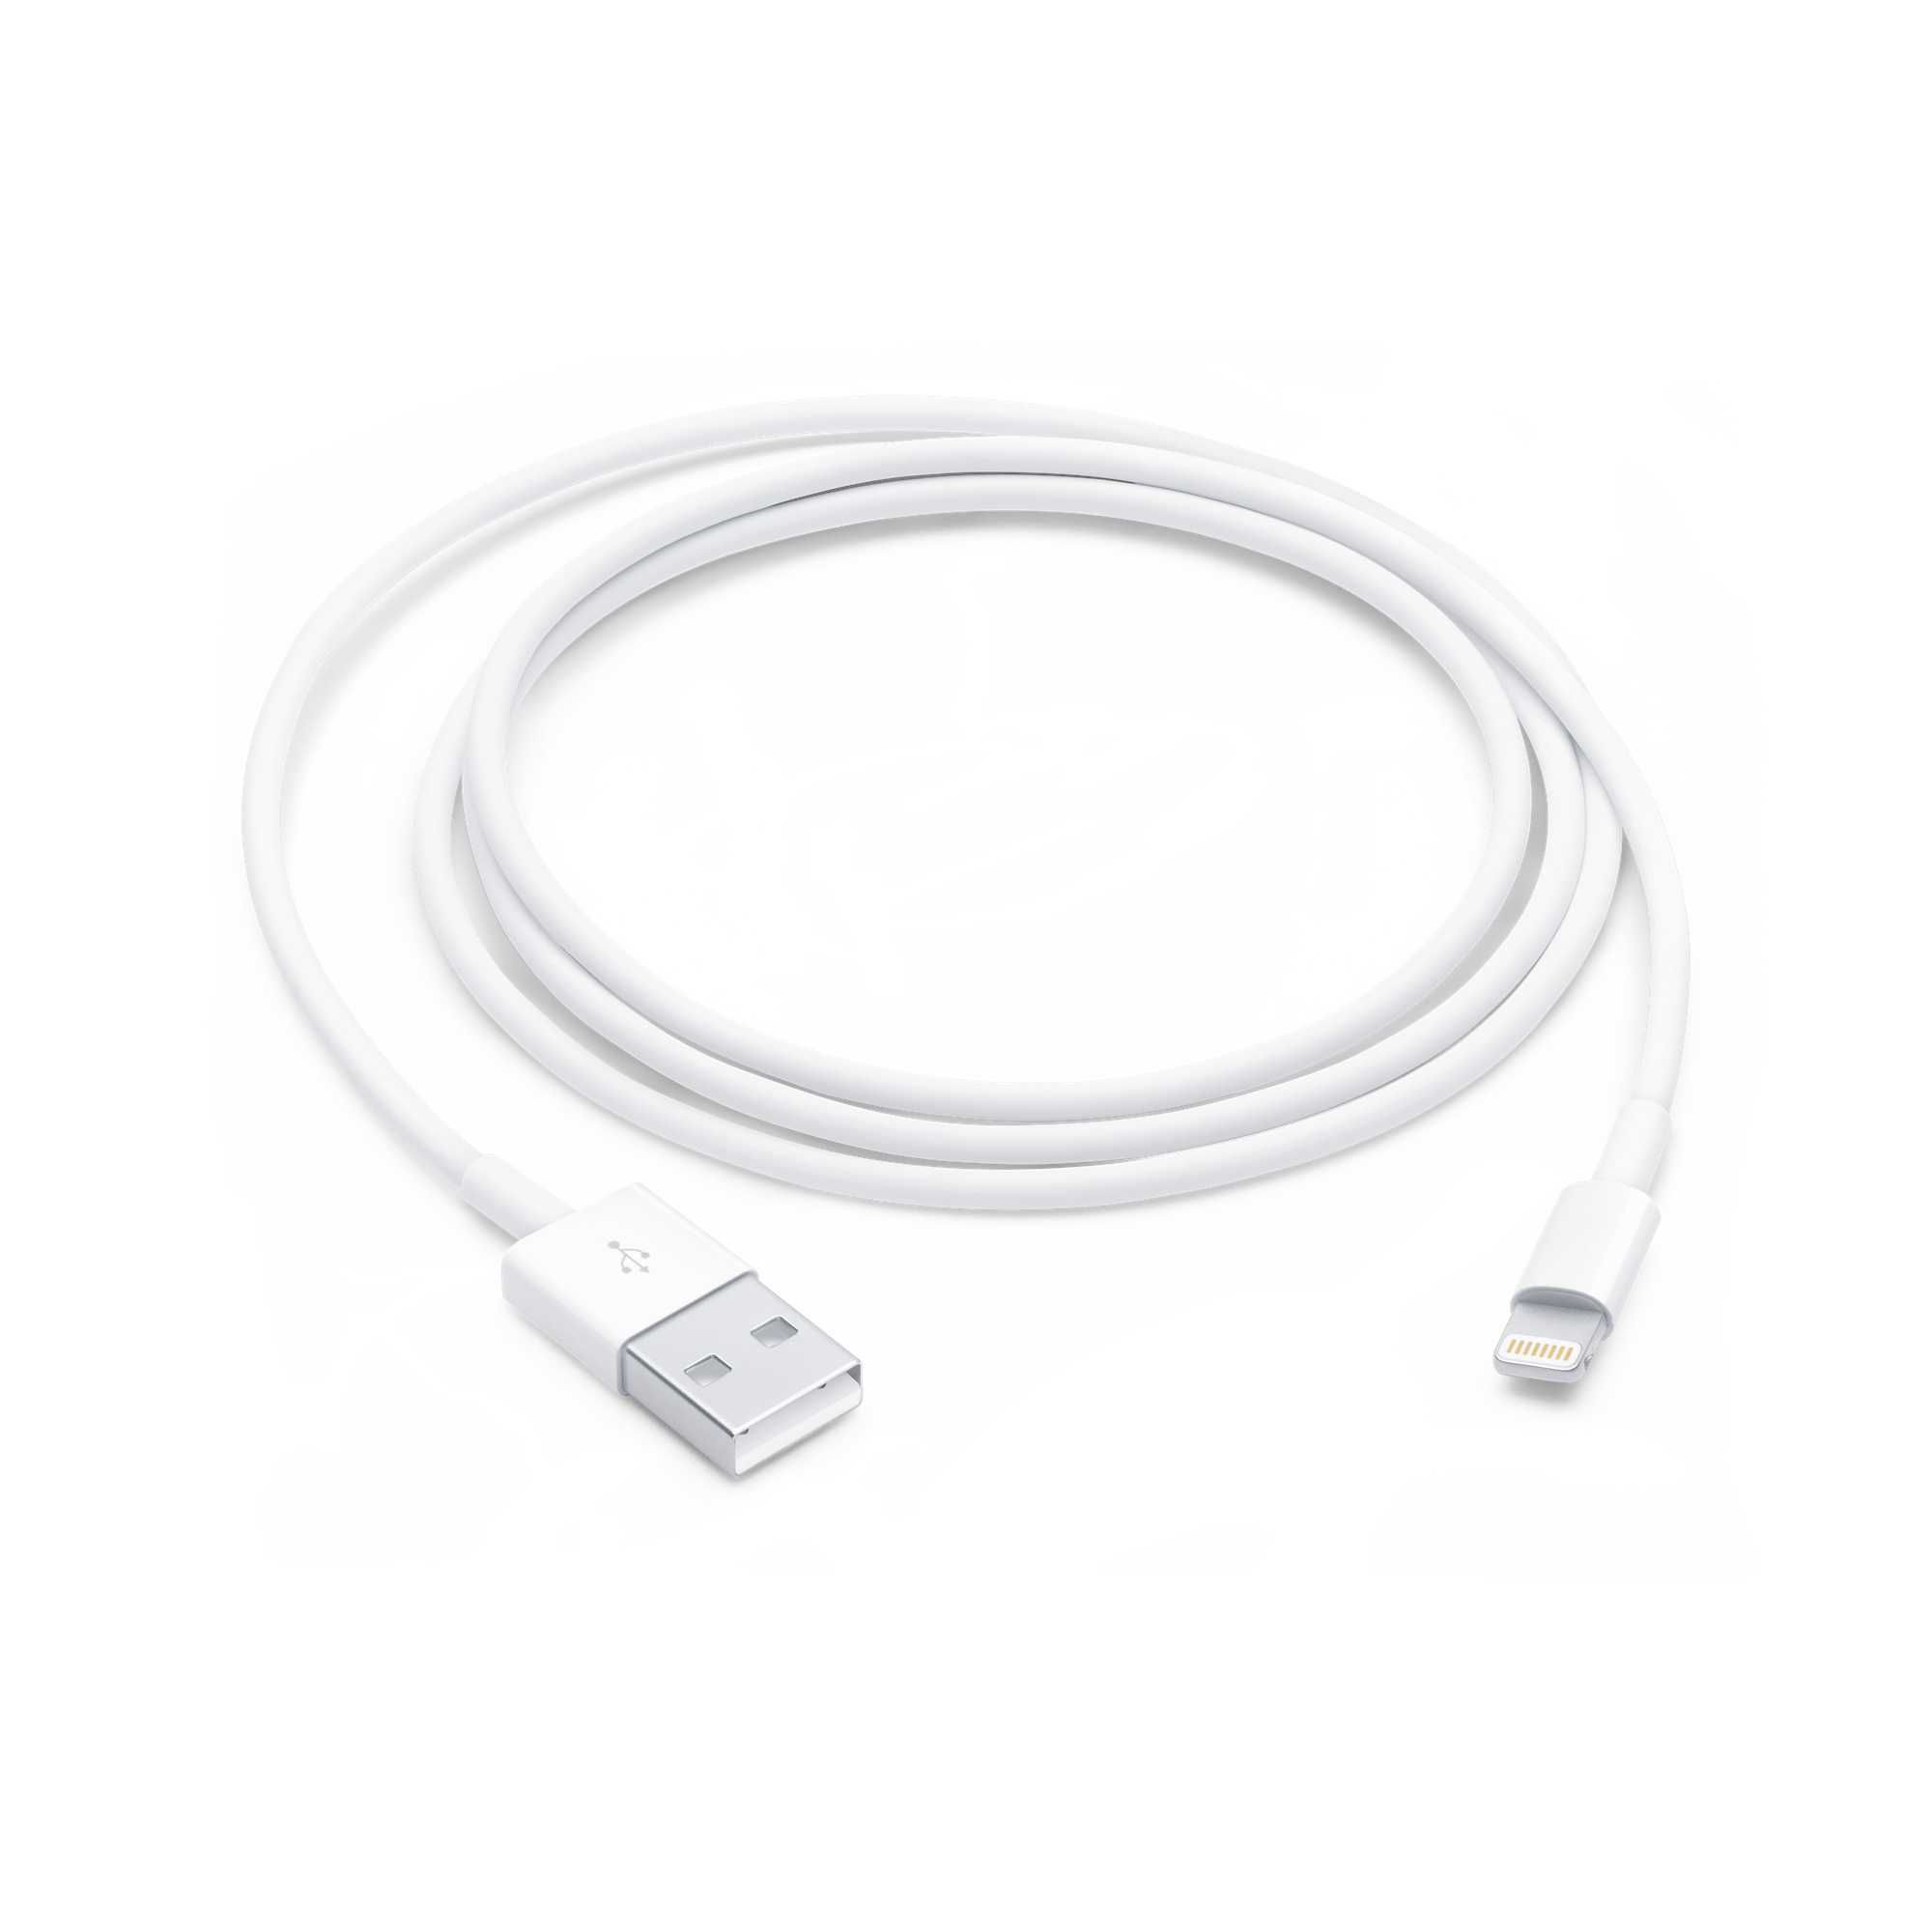 Oryginalny kabel do ładowania USB iPhone